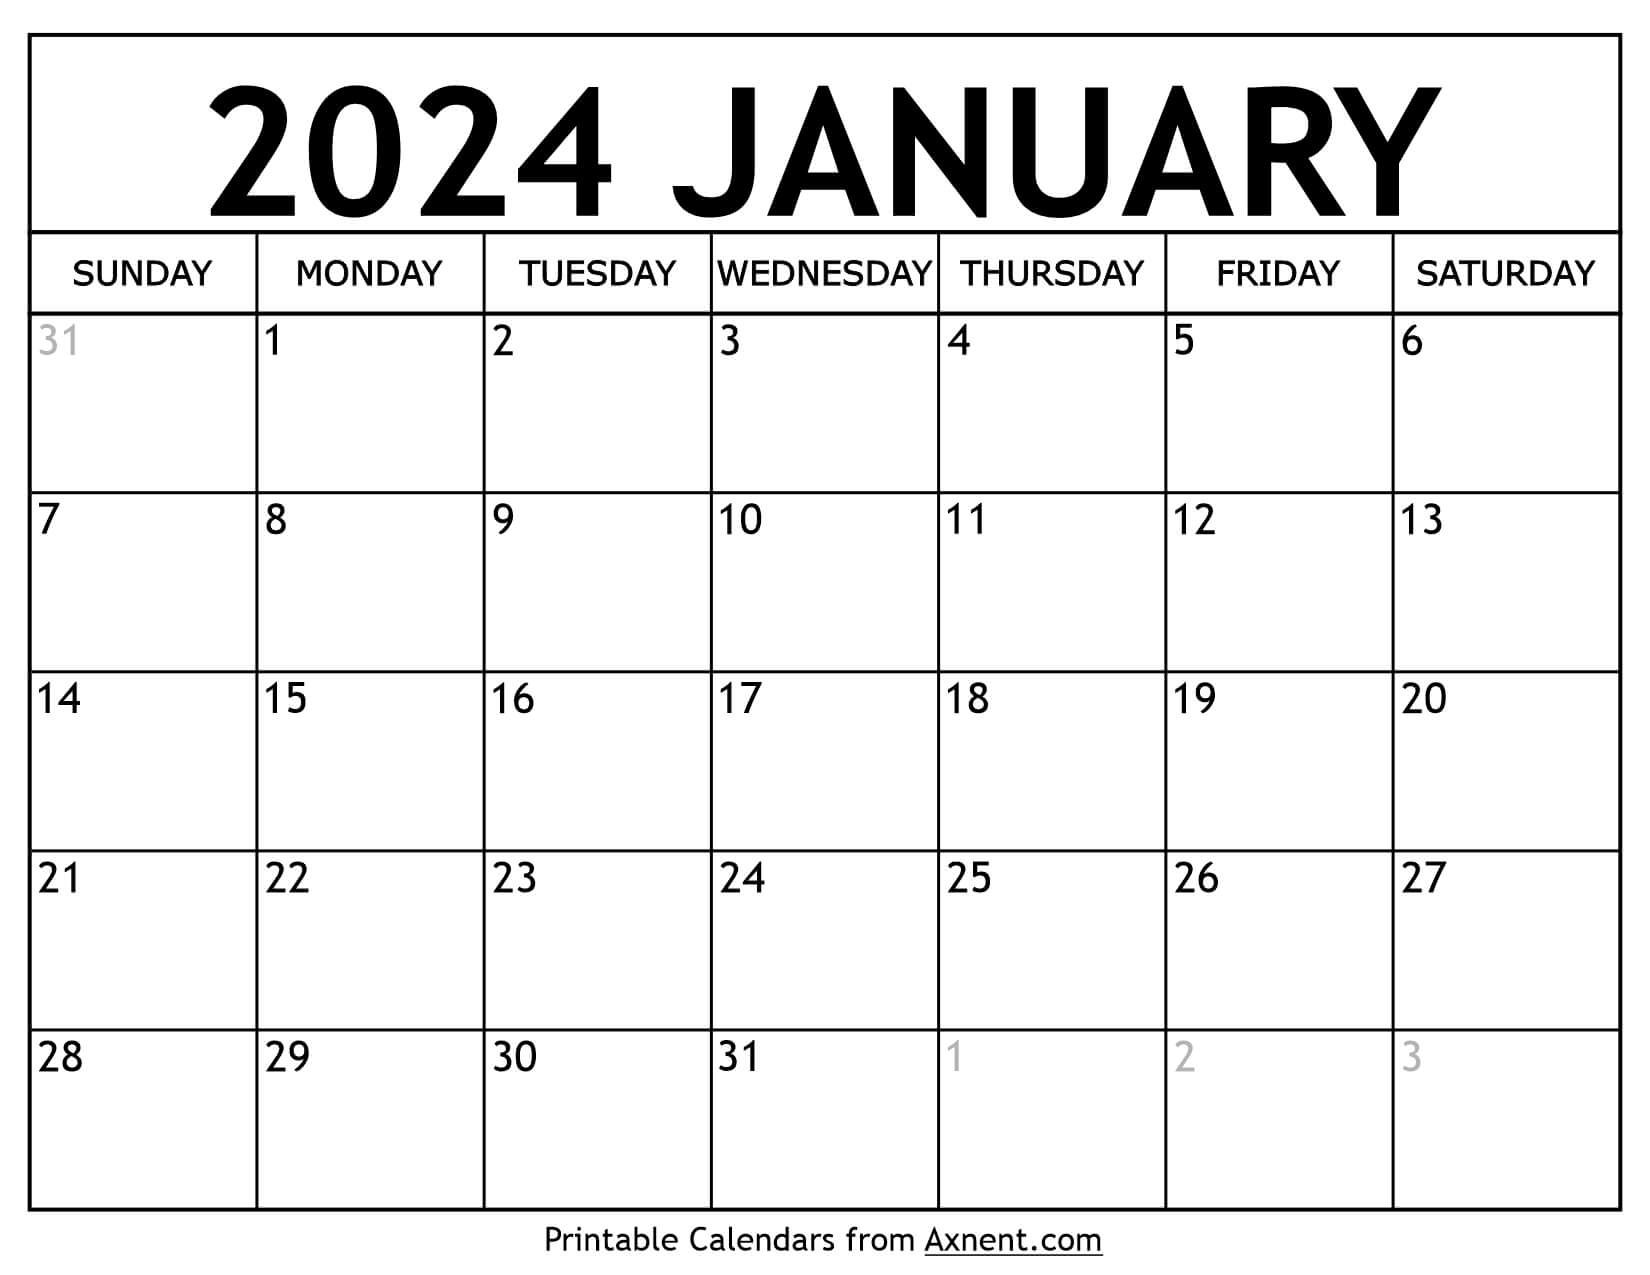 Printable January 2024 Calendar Template - Print Now for Free Printable Calendar Jan 2024